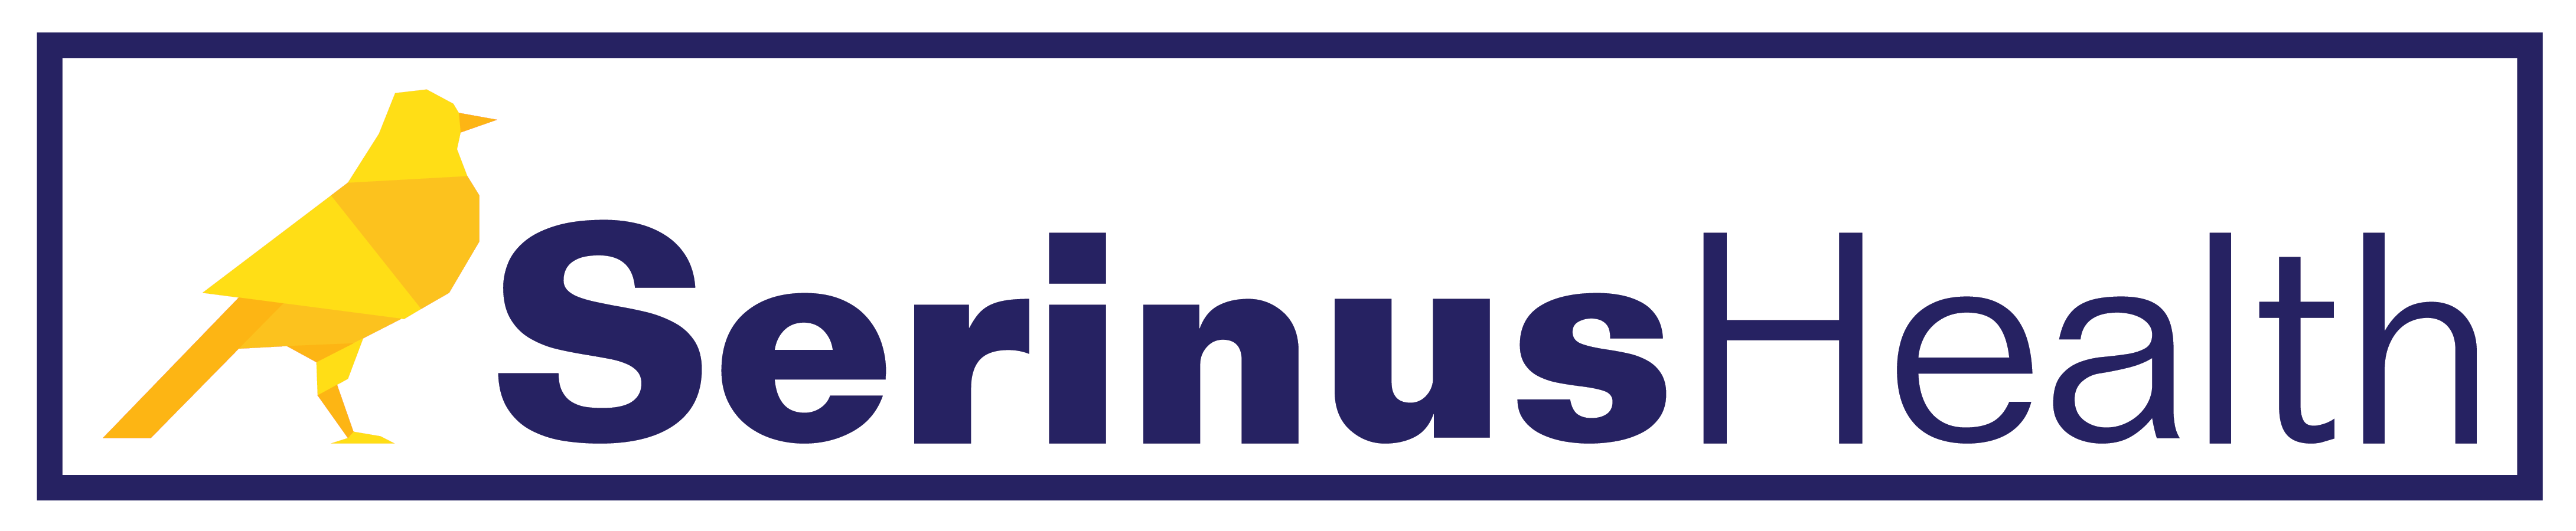 Serinus Health Logo 2-01.png